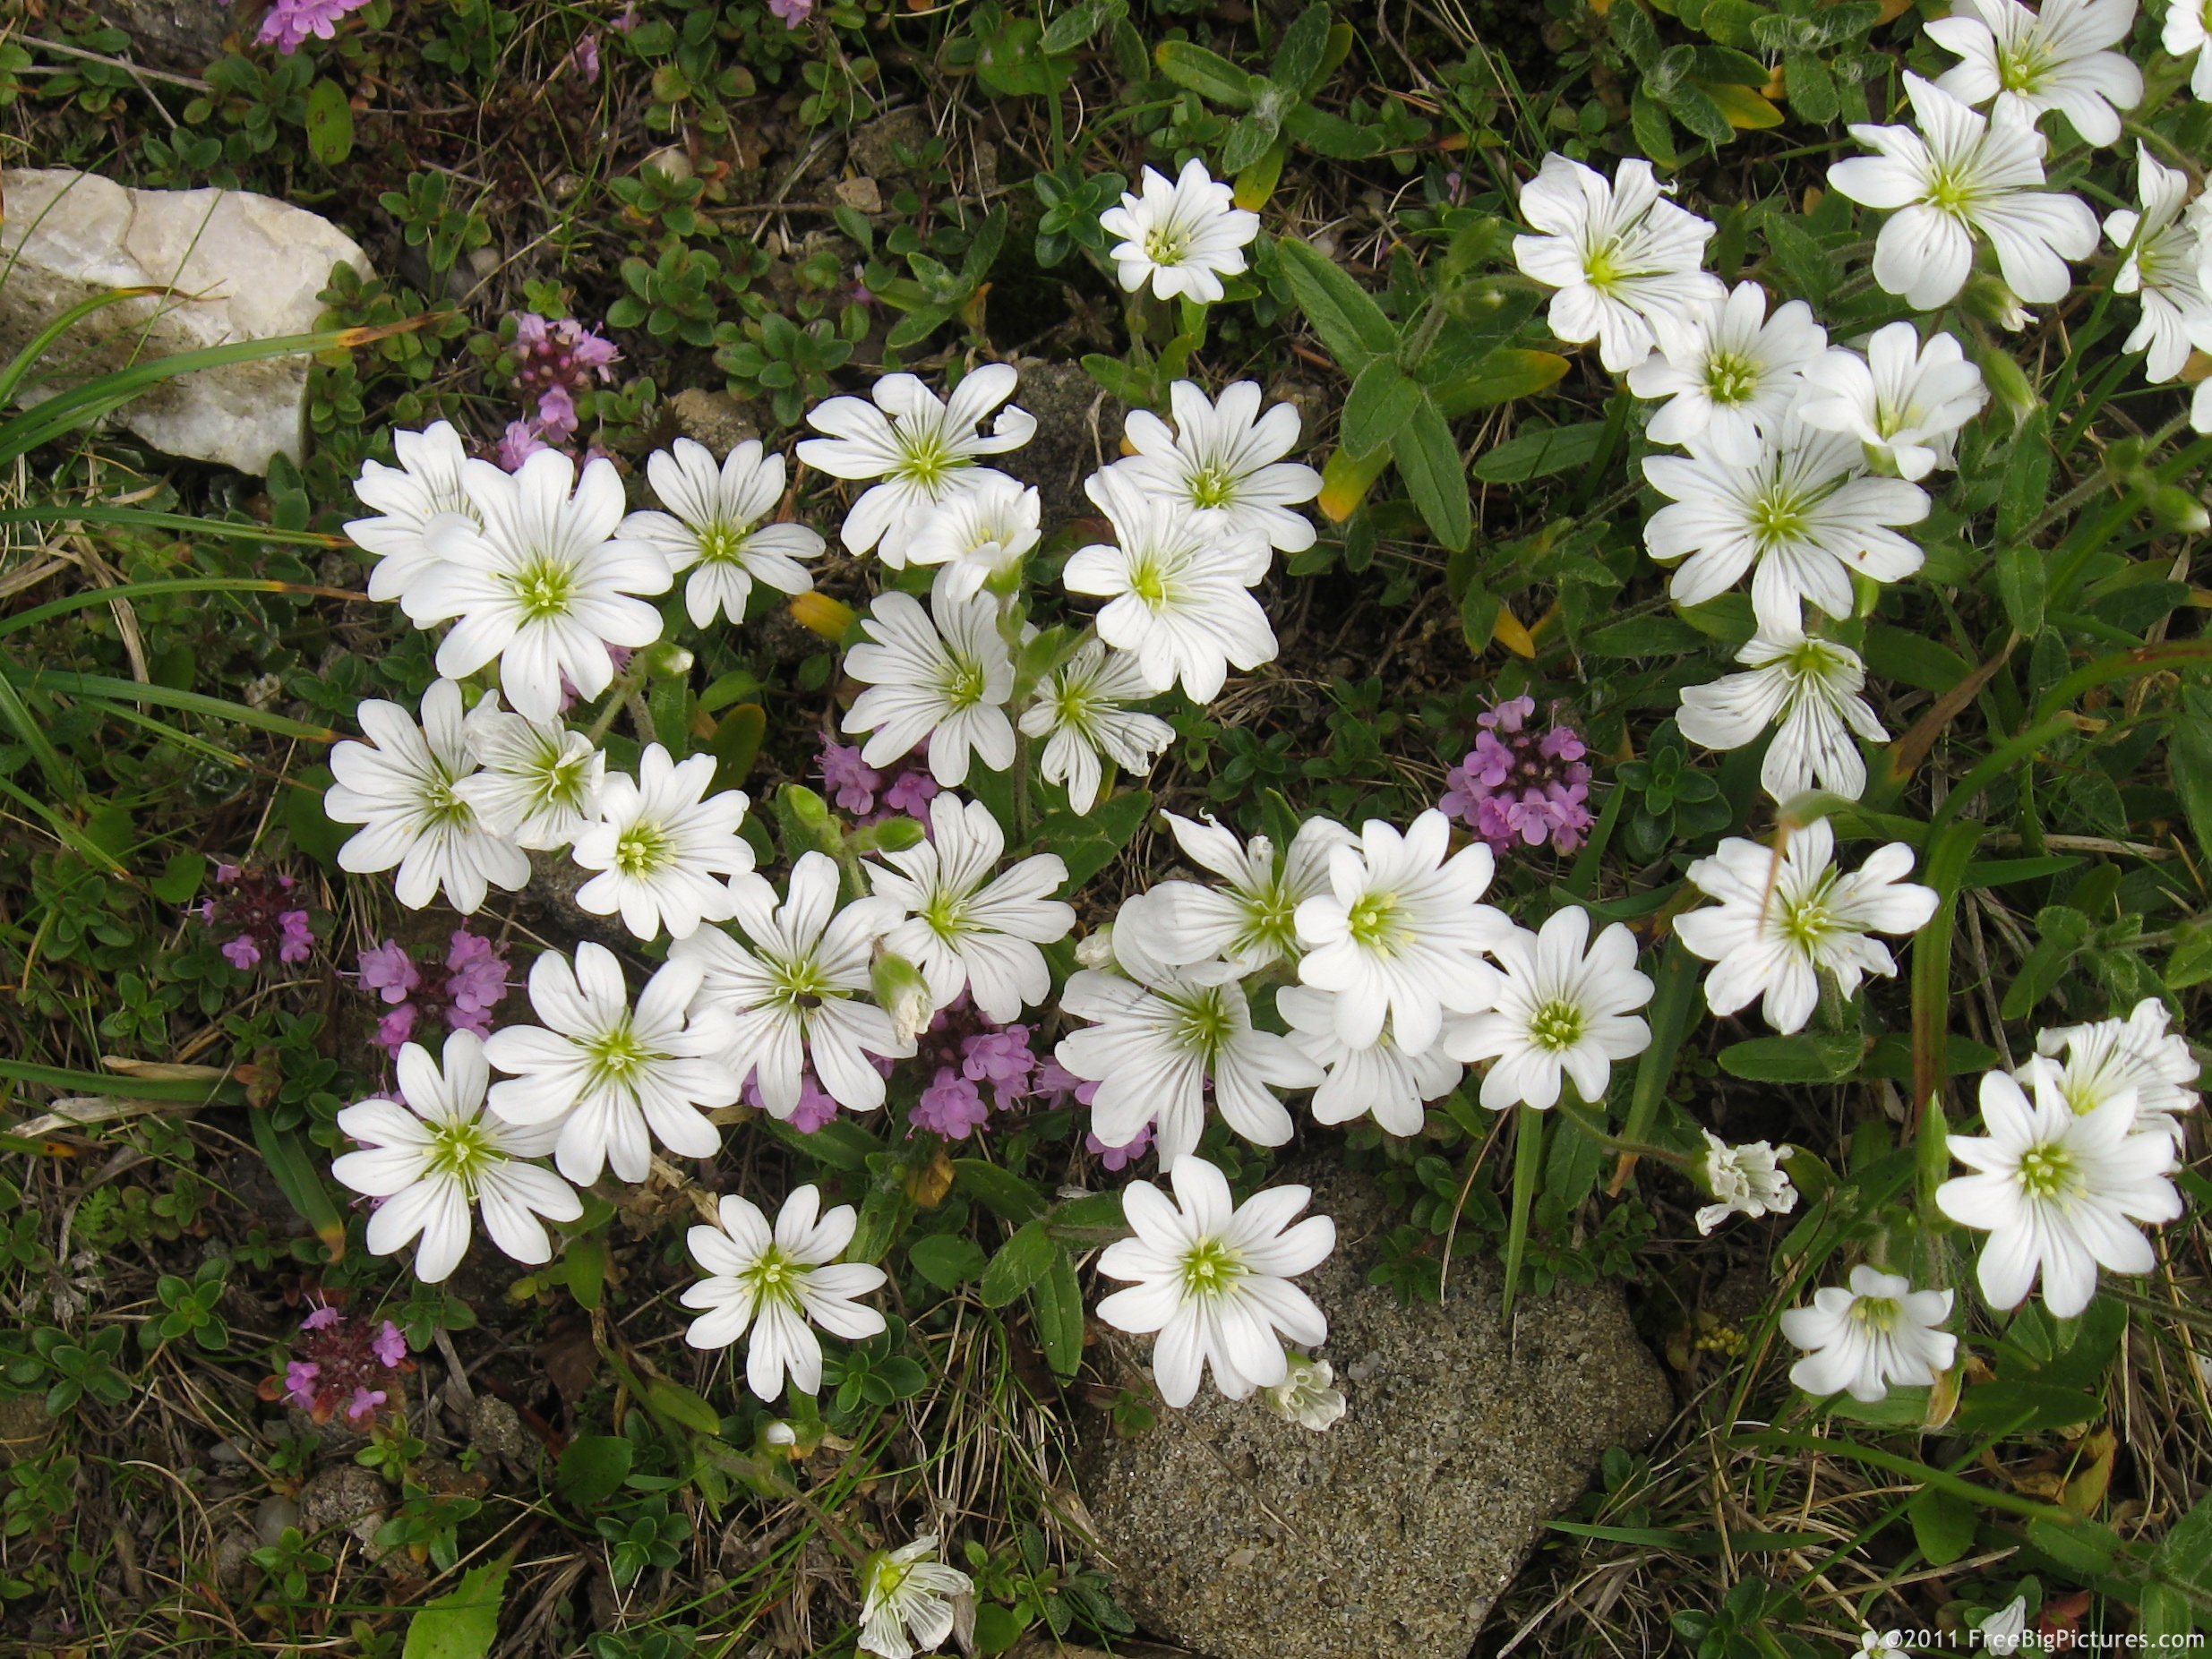 Cerastium arvense - a plant used as an antihemoragic in past